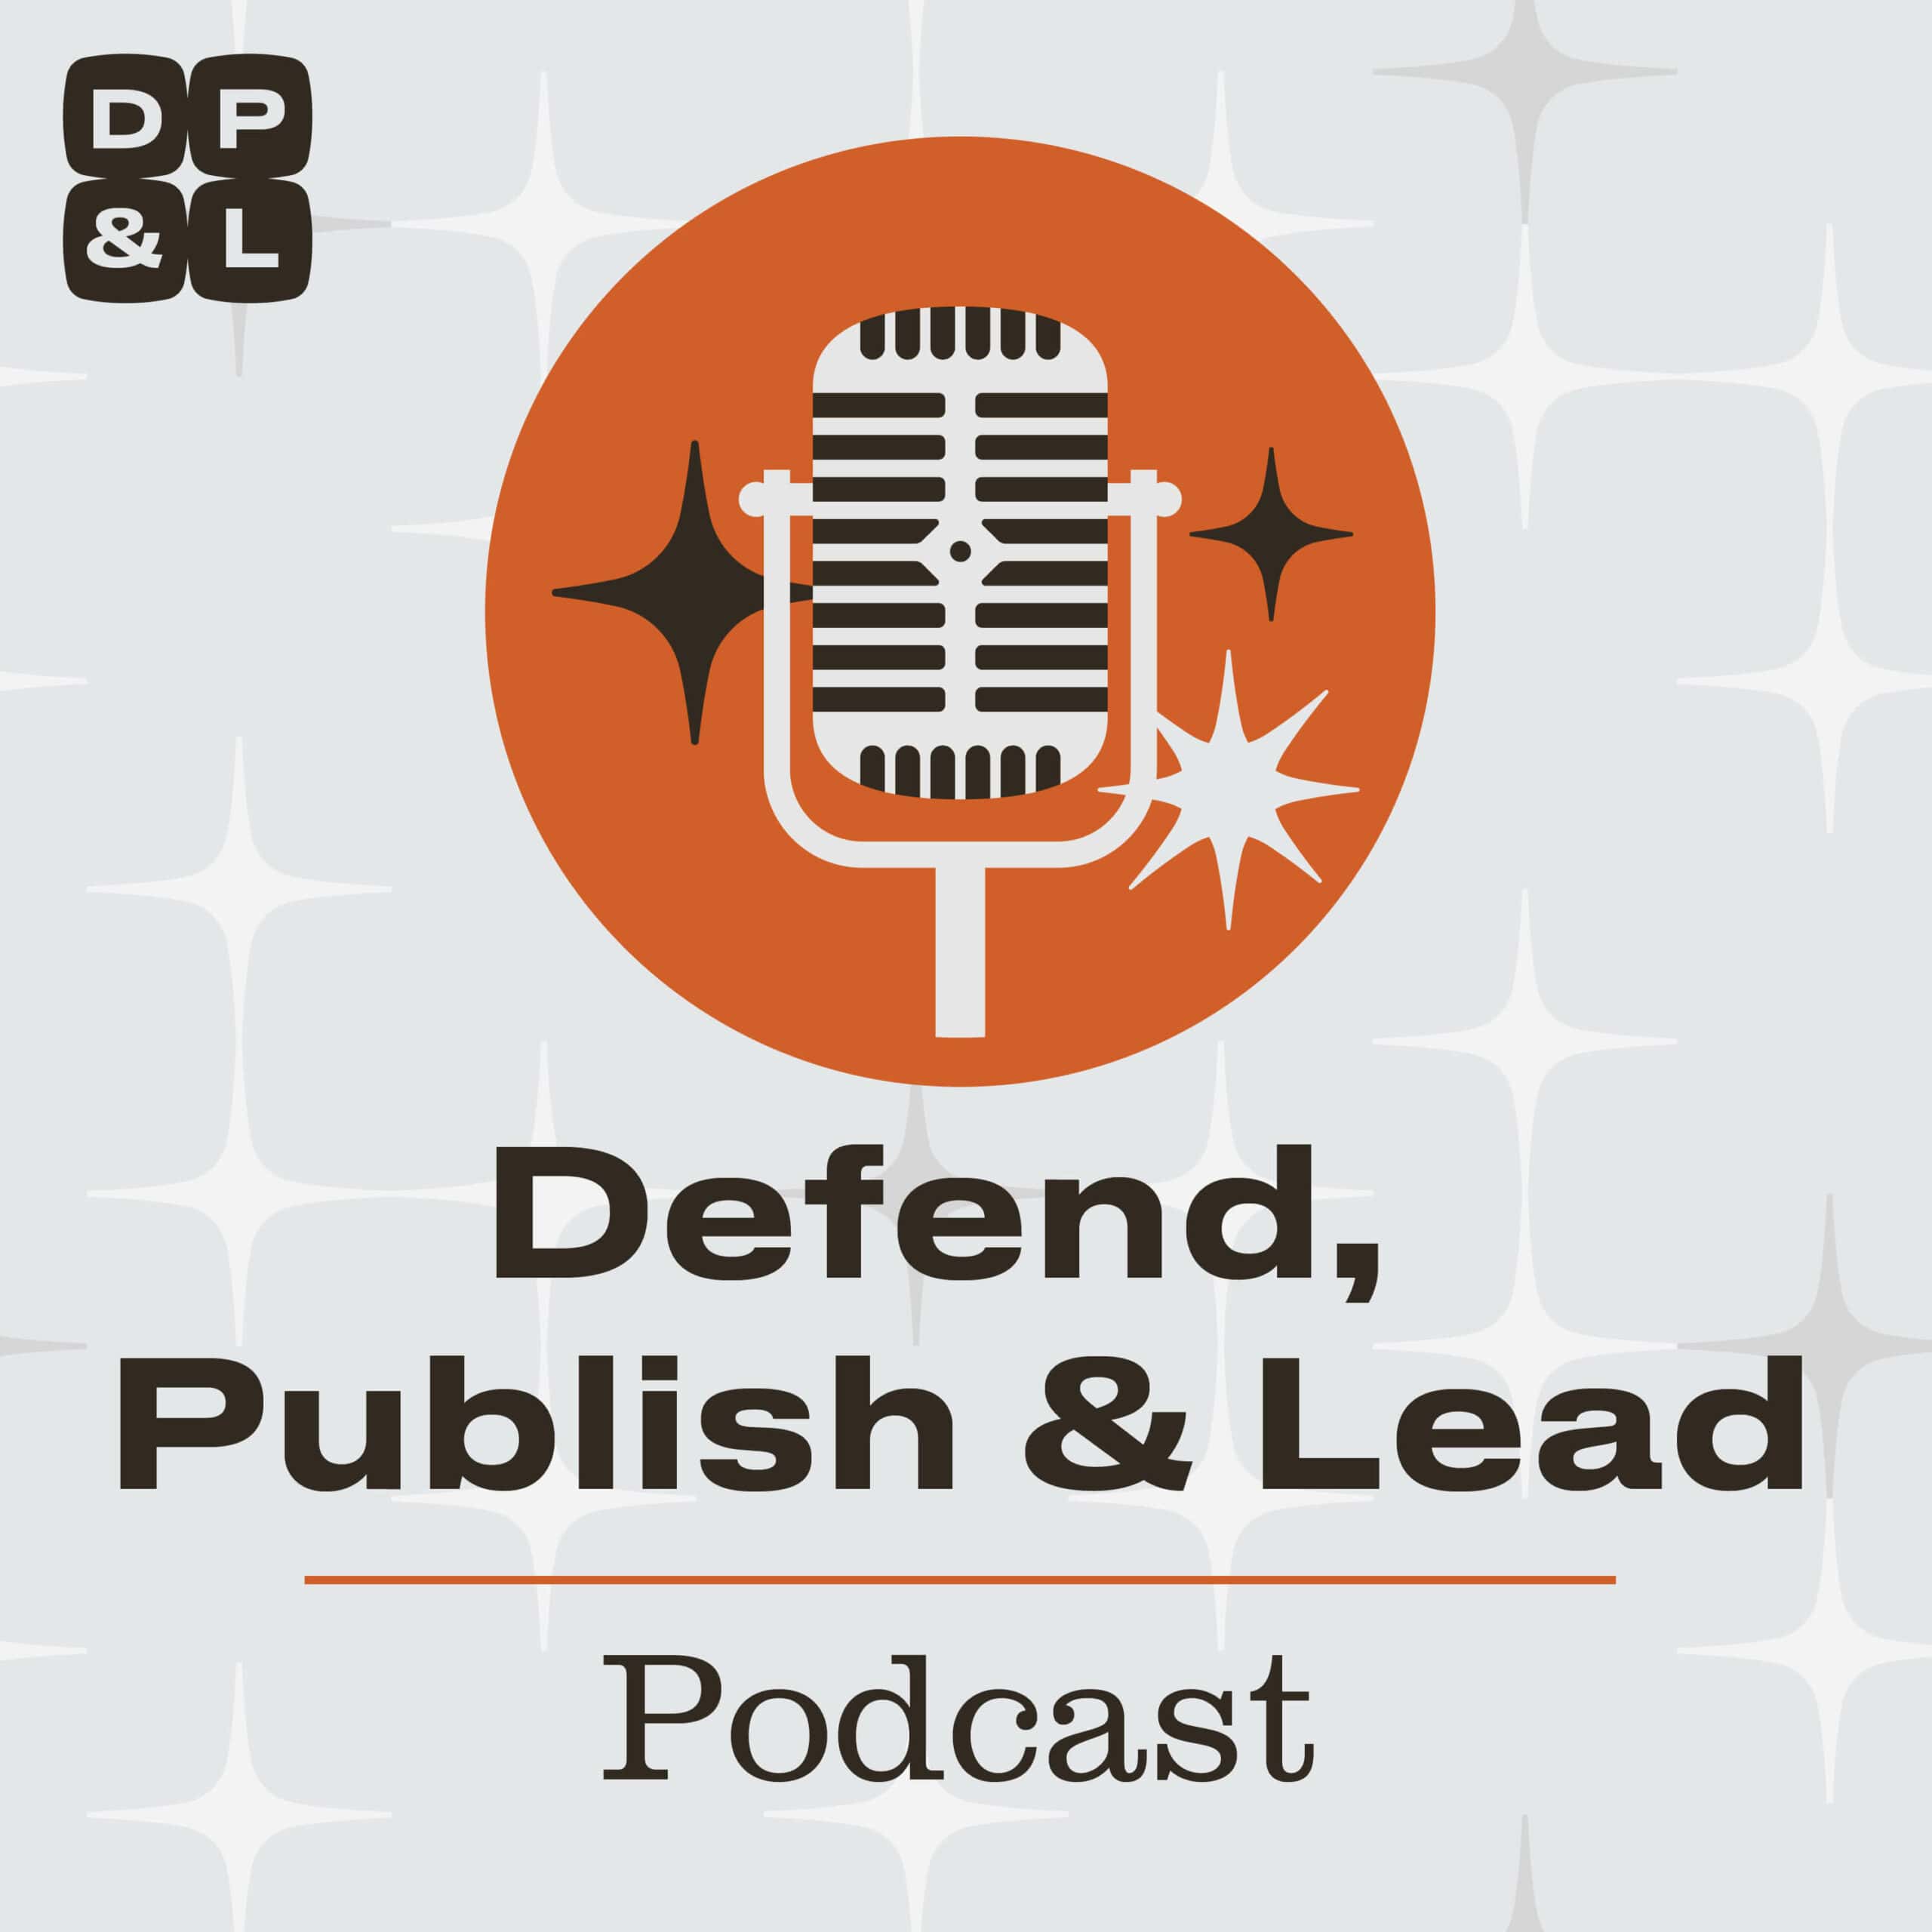 defend, publish & lead podcast logo